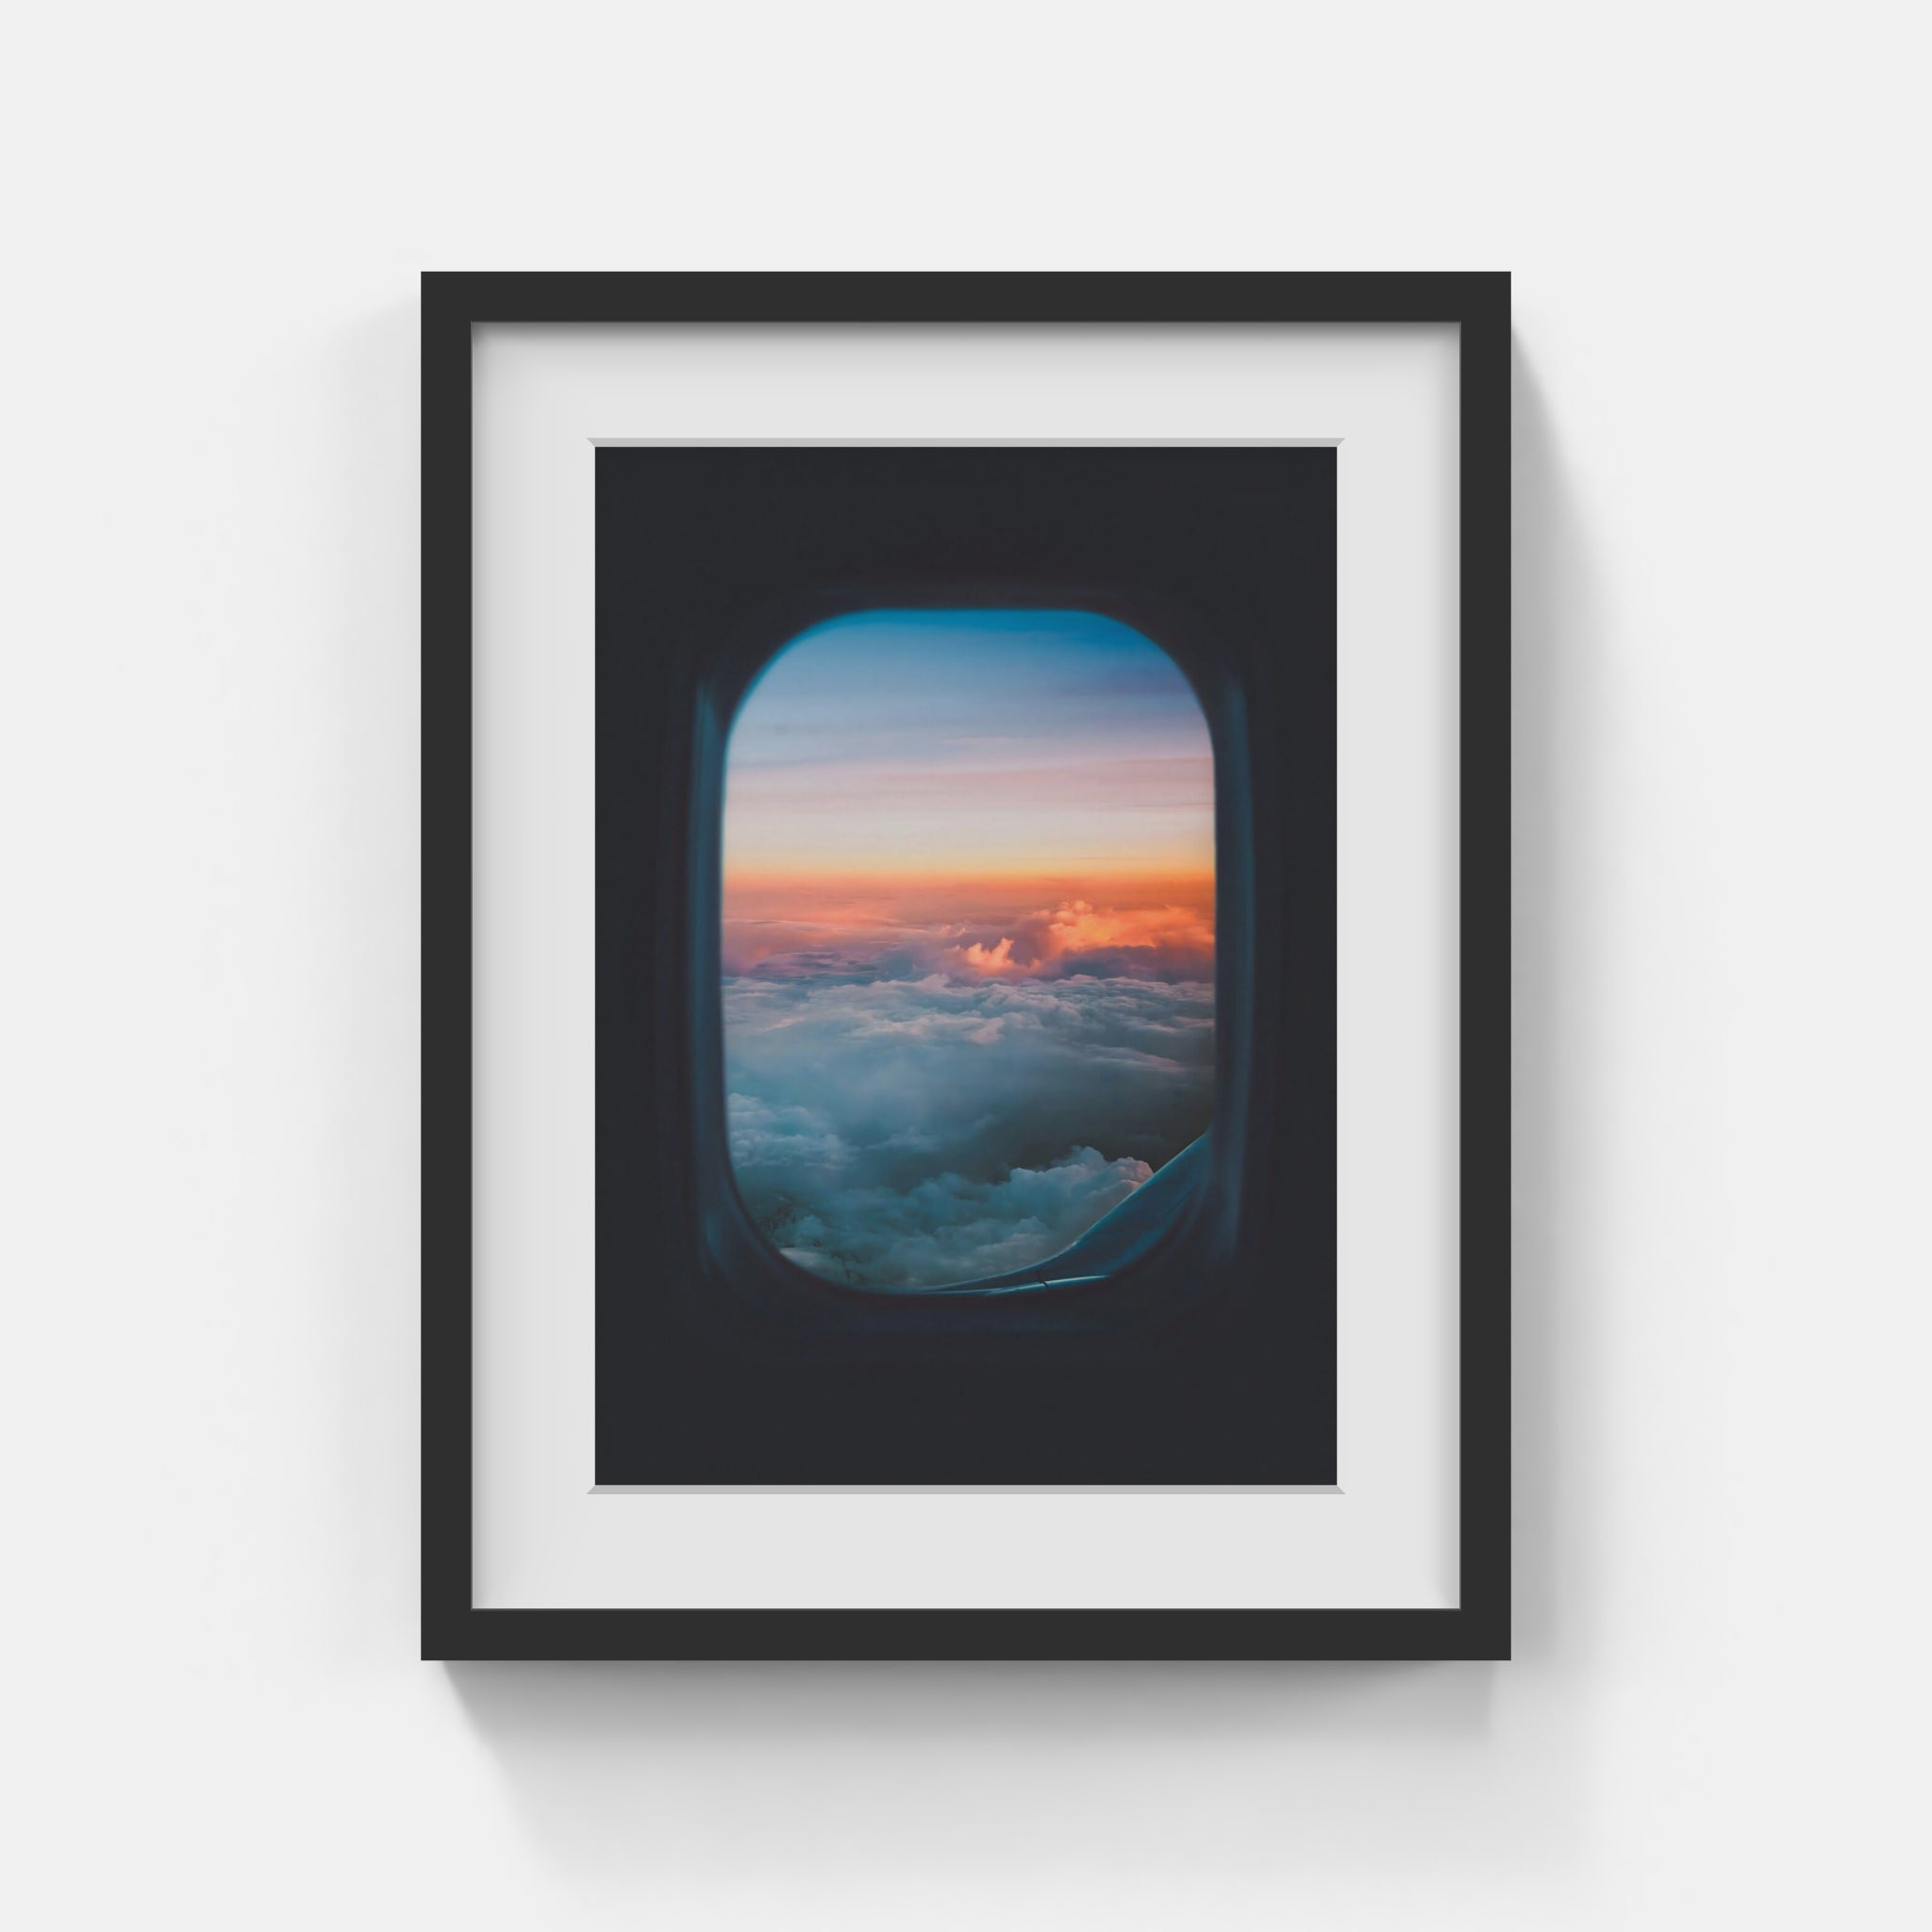 Window to the Sky